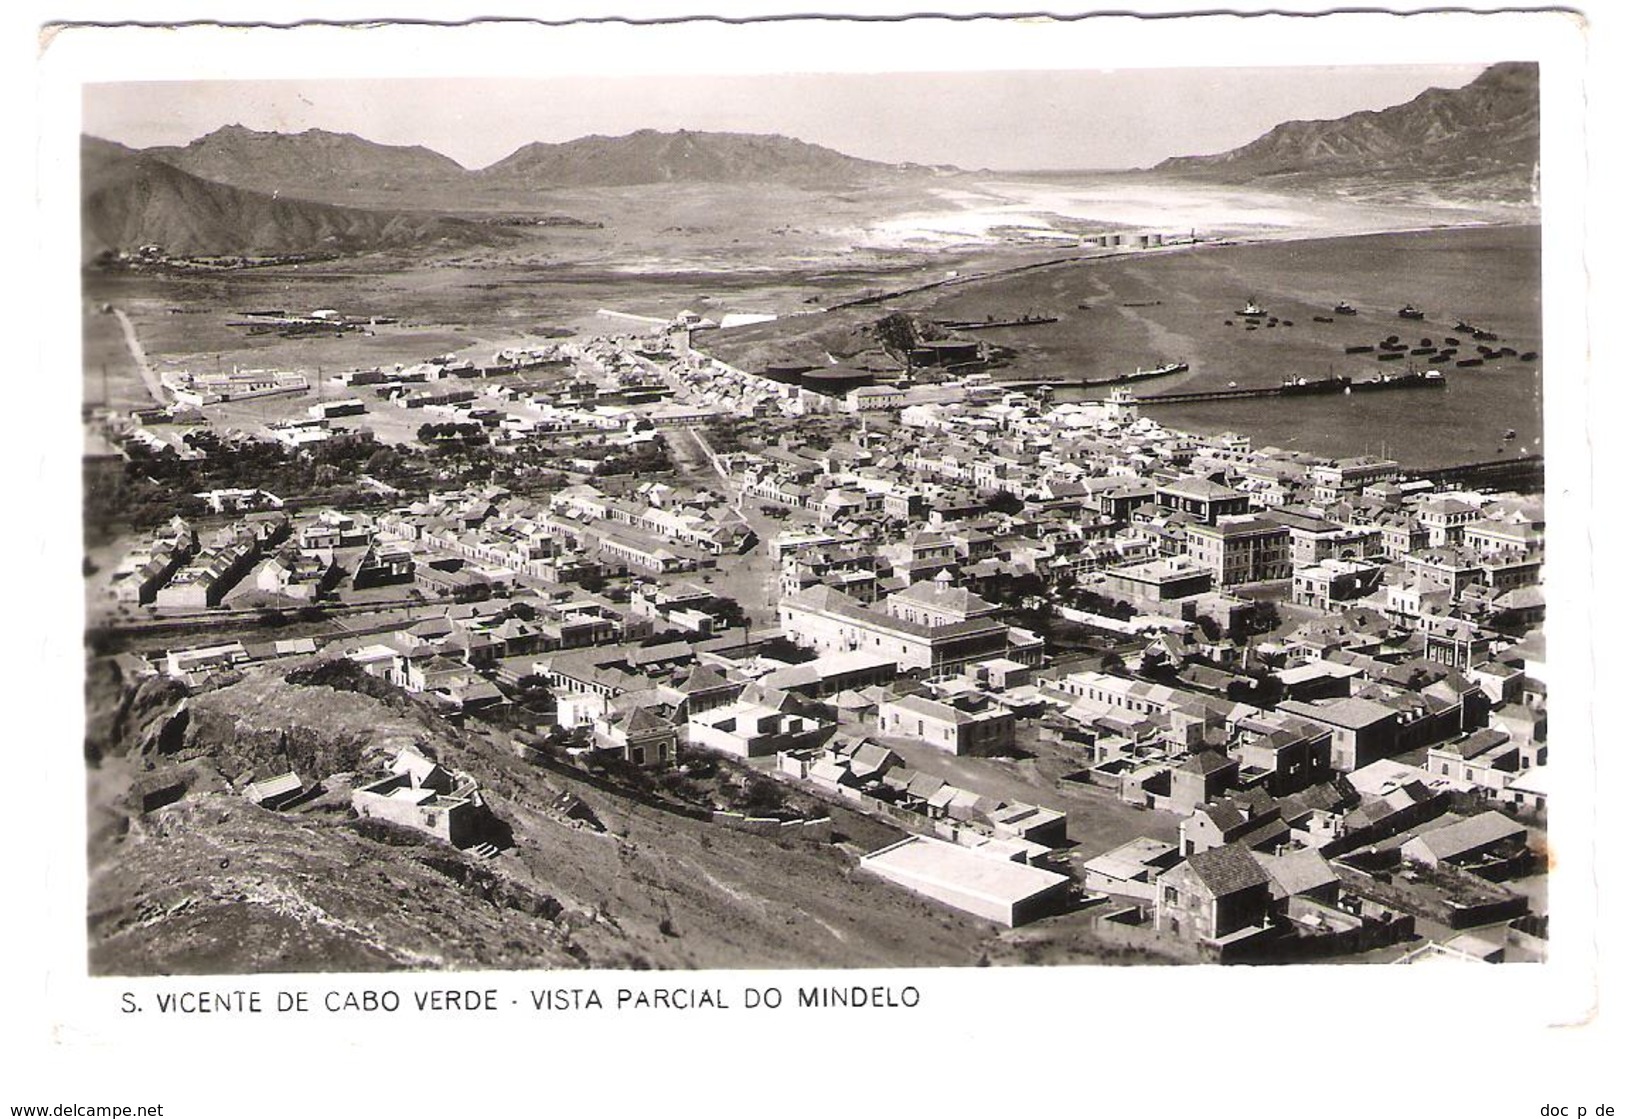 Cap Verde - S. Vincente De Cabo Verde - Vista Parcial Do Mindelo - Old View - Posted With Stamp - Cap Vert